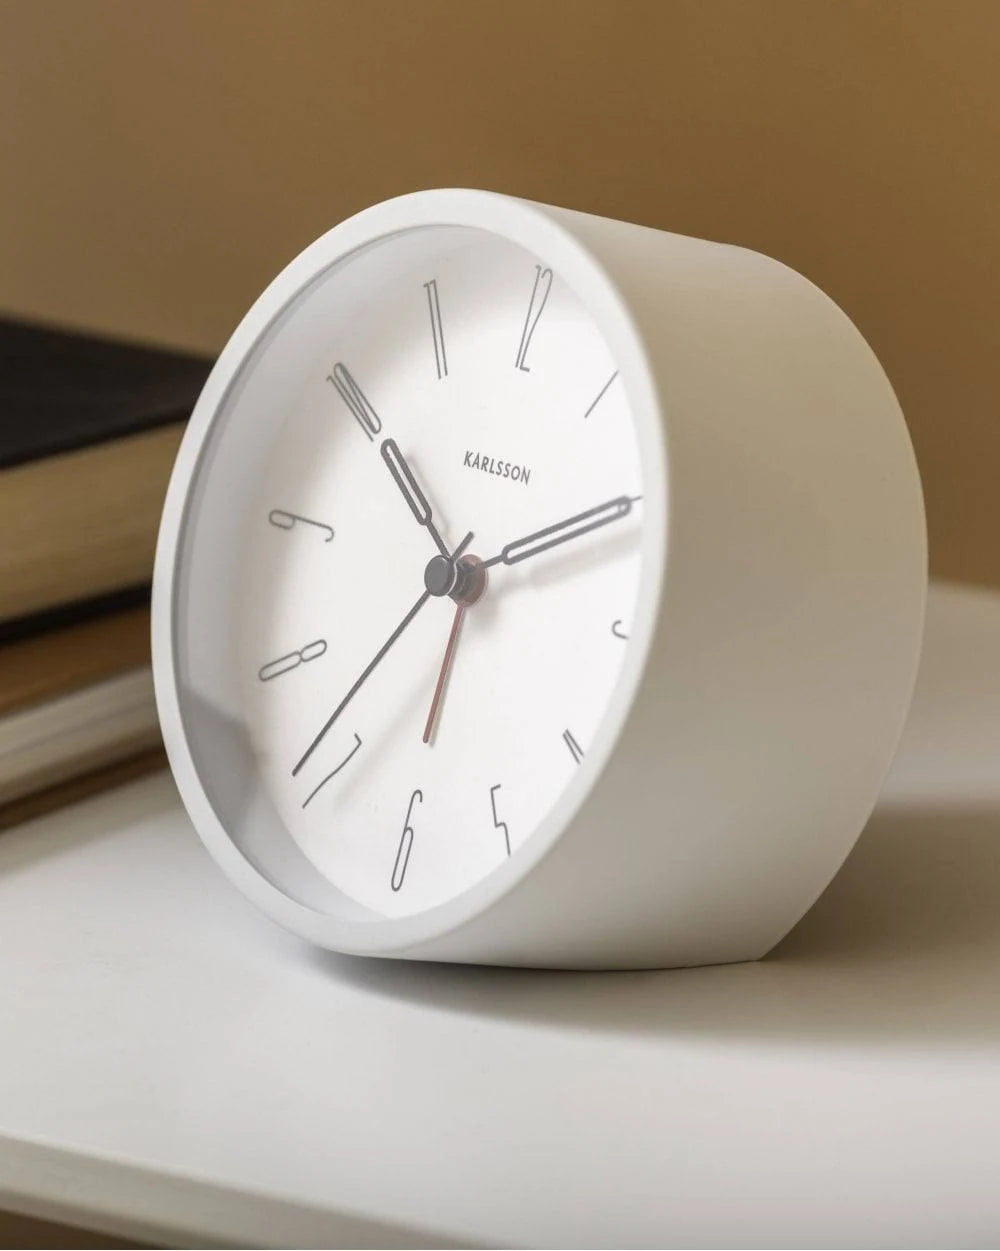 Karlsson belle alarm clock white